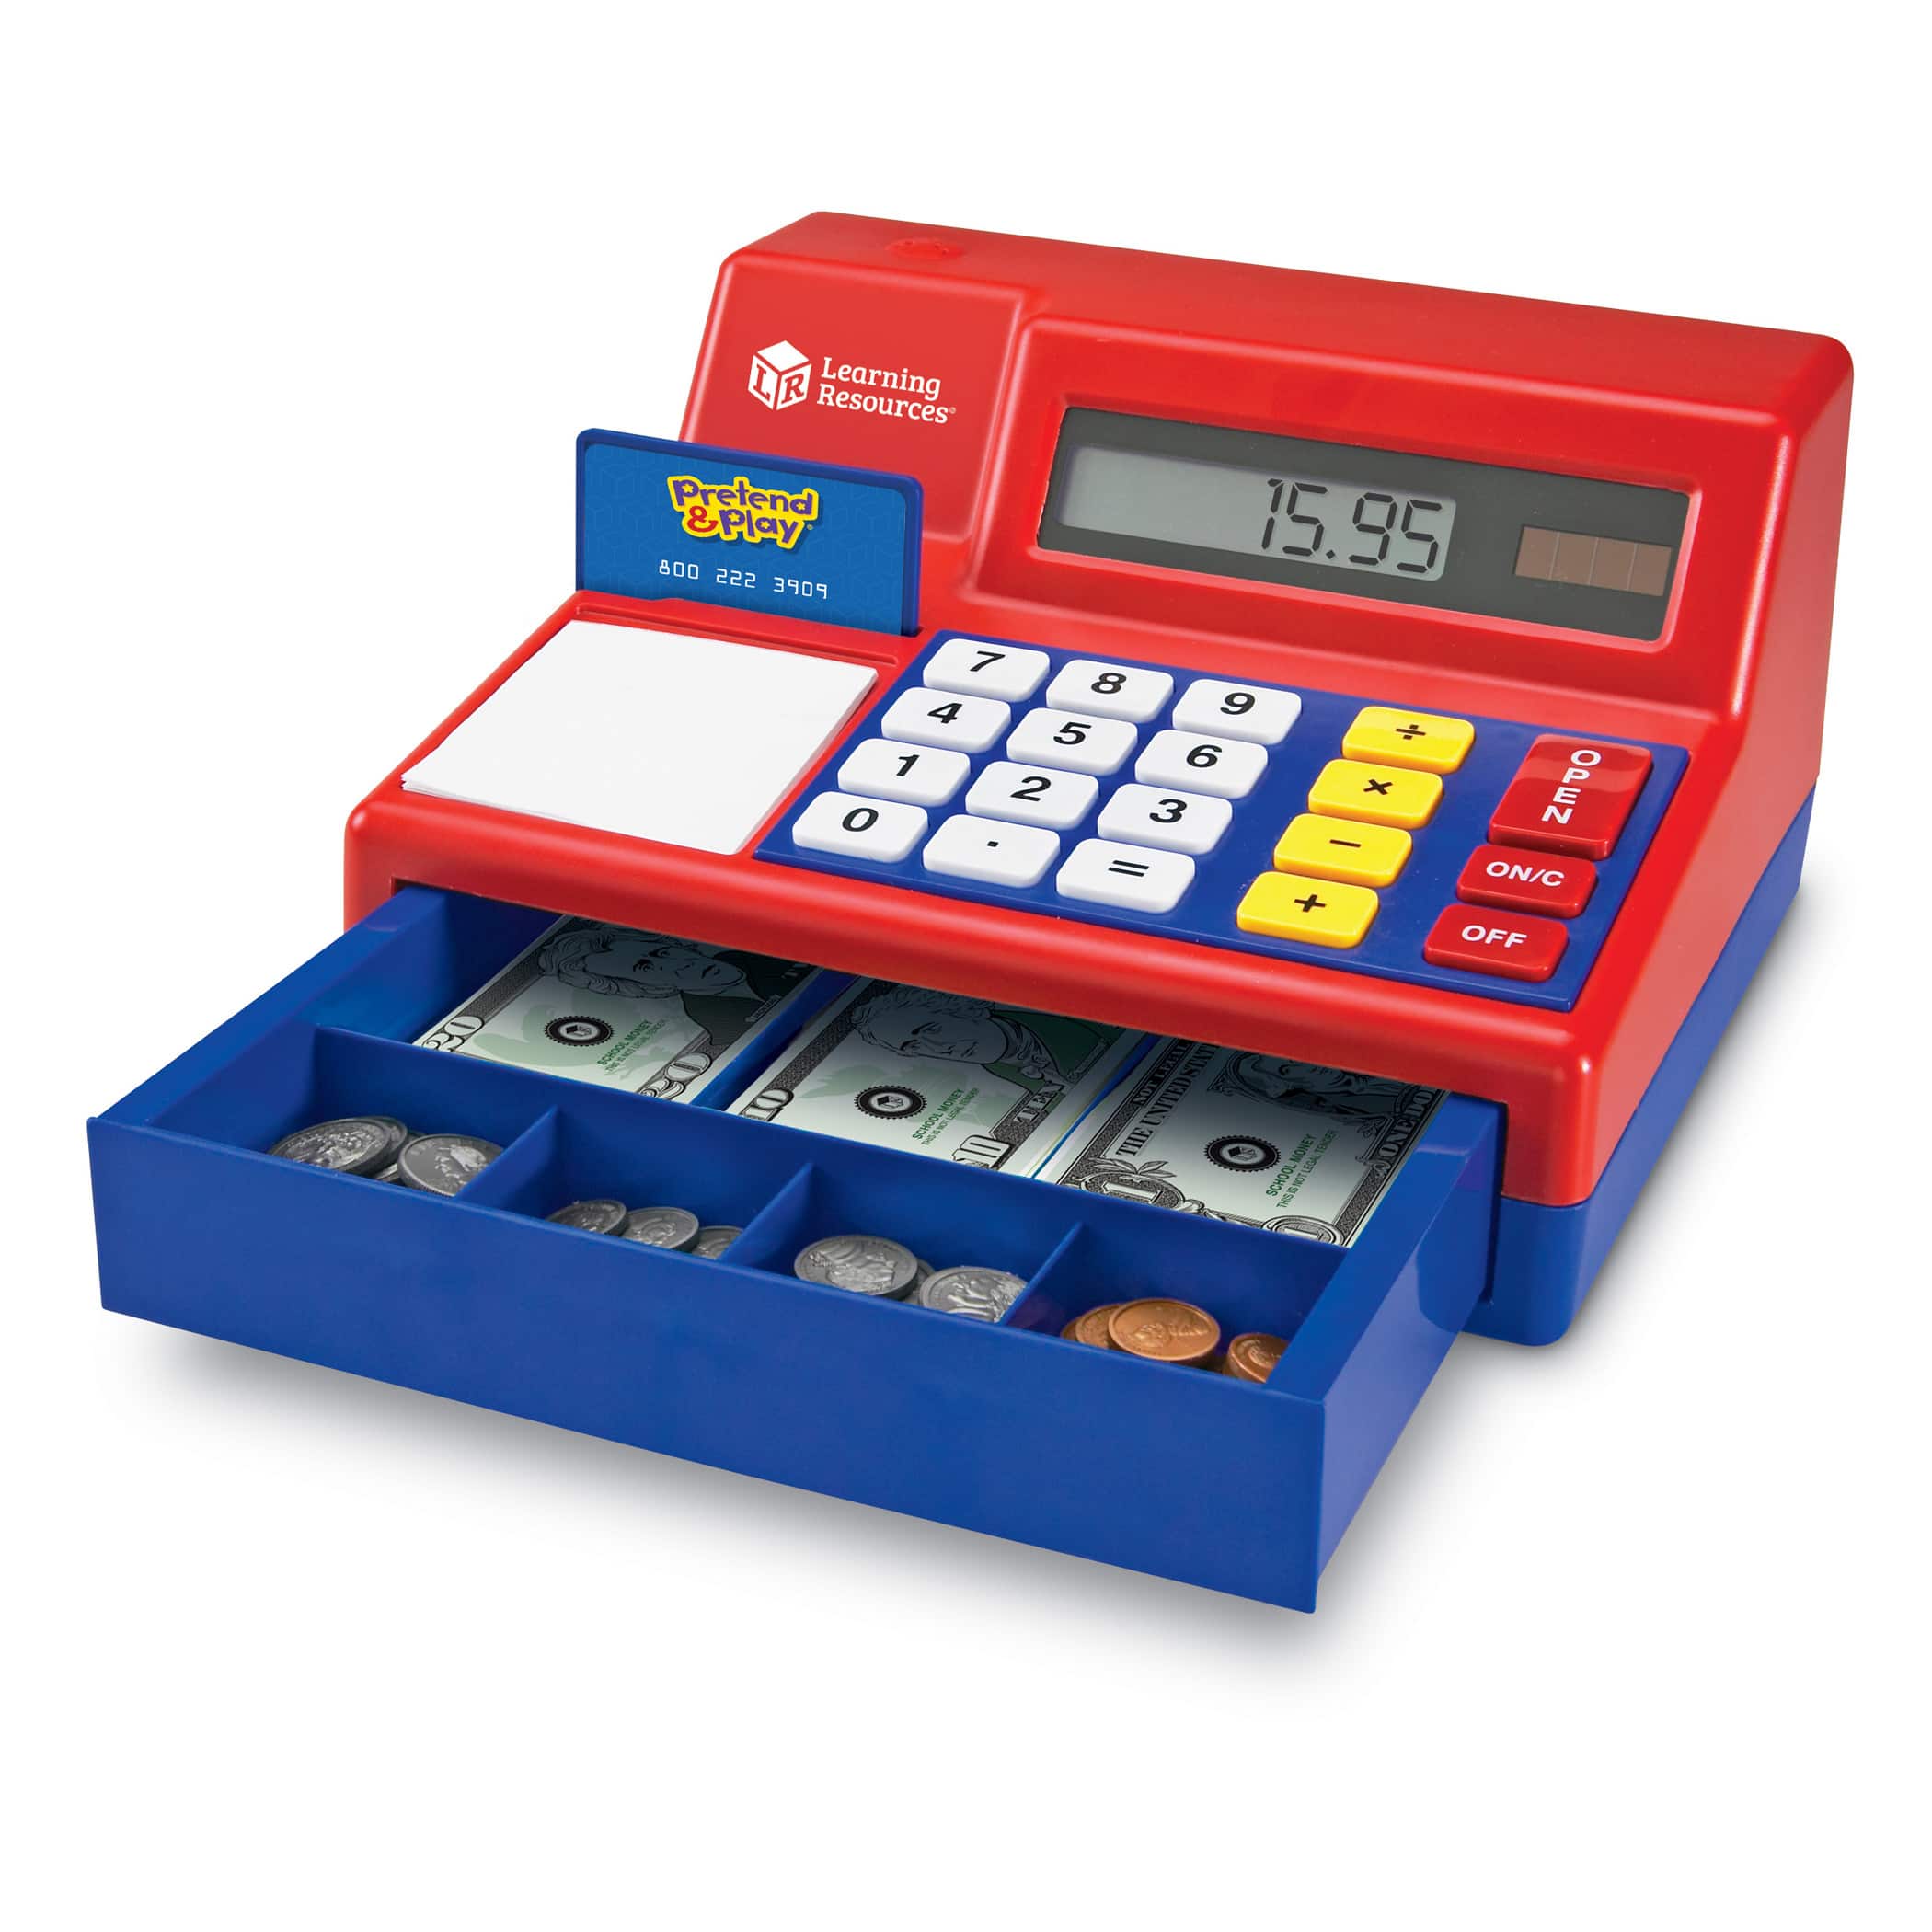 Pretend and Play&#xAE; Calculator Cash Register